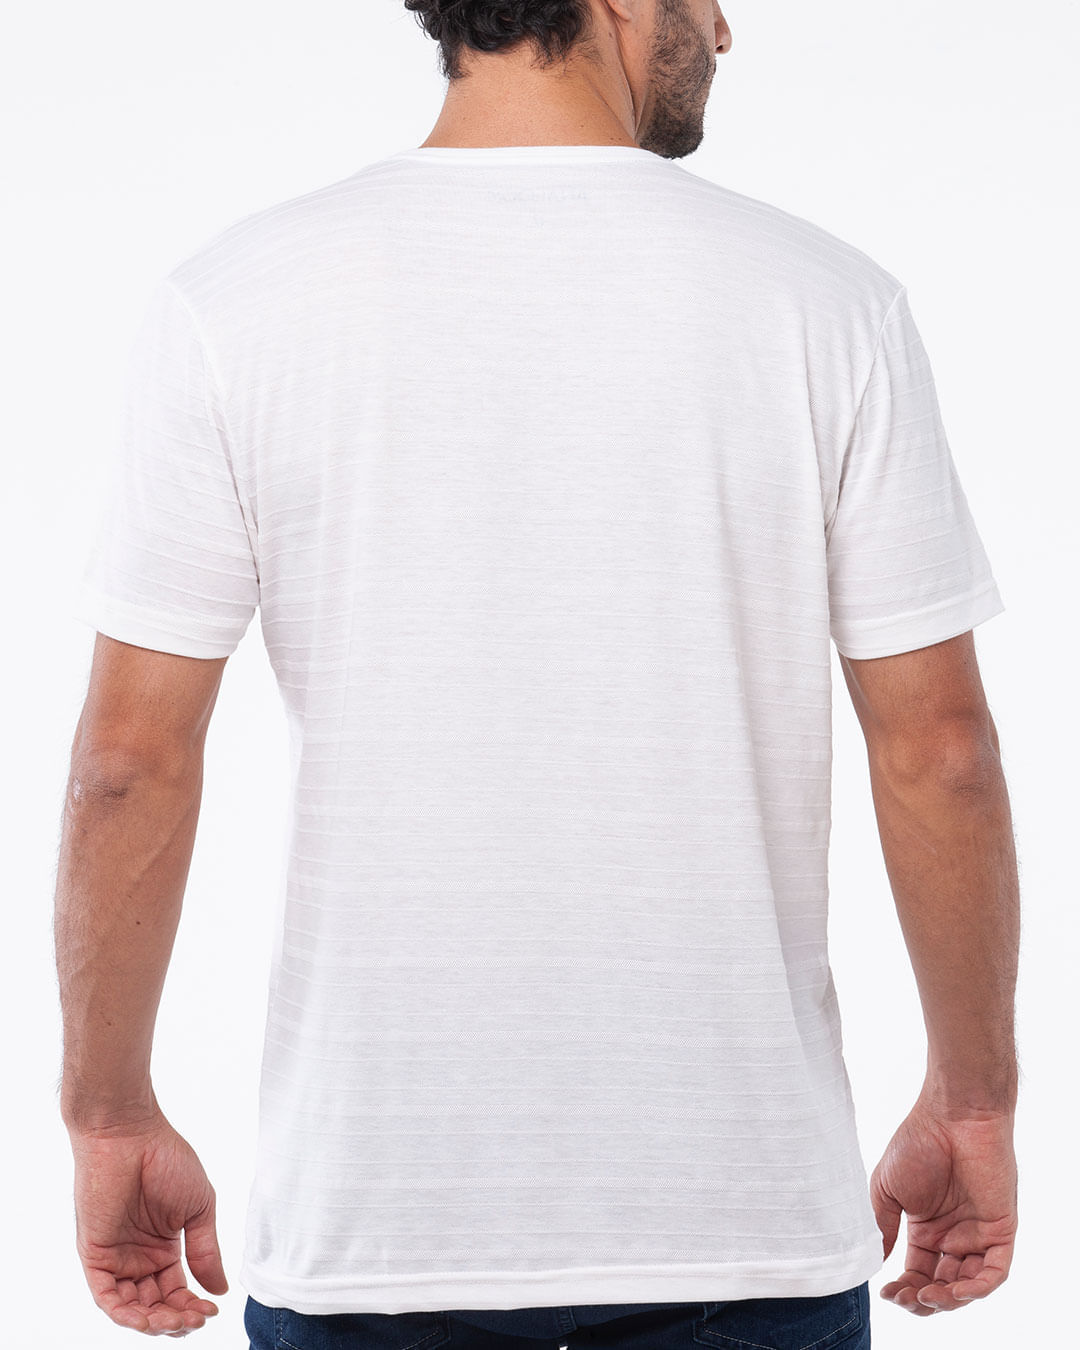 Camiseta-Masculina-Manga-Curta-Estampa-Frontal-Navy-Branca